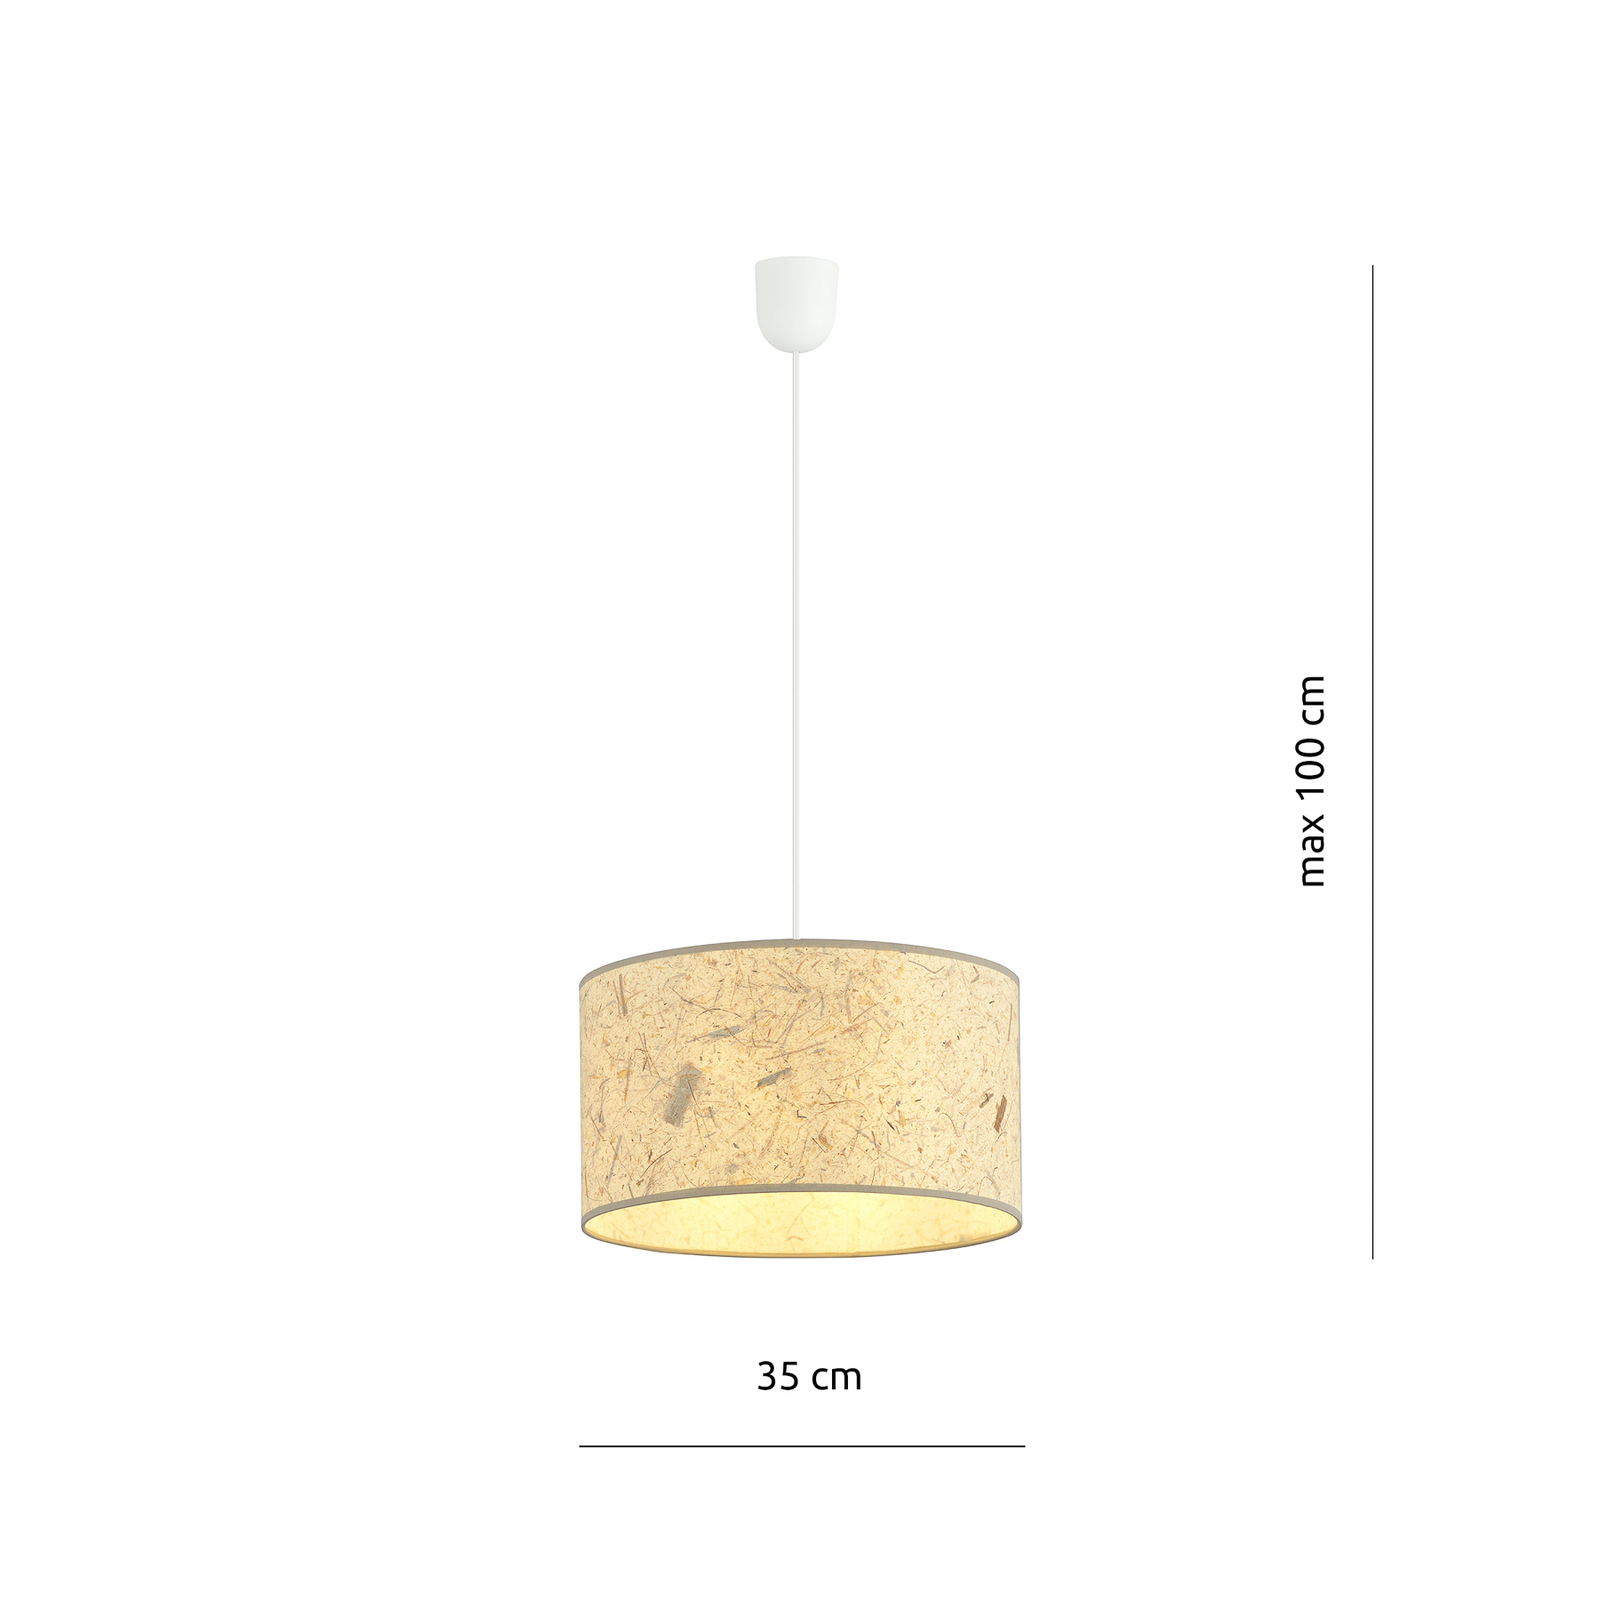 Hanglamp Aston, Ø 35 cm, kurkoptiek